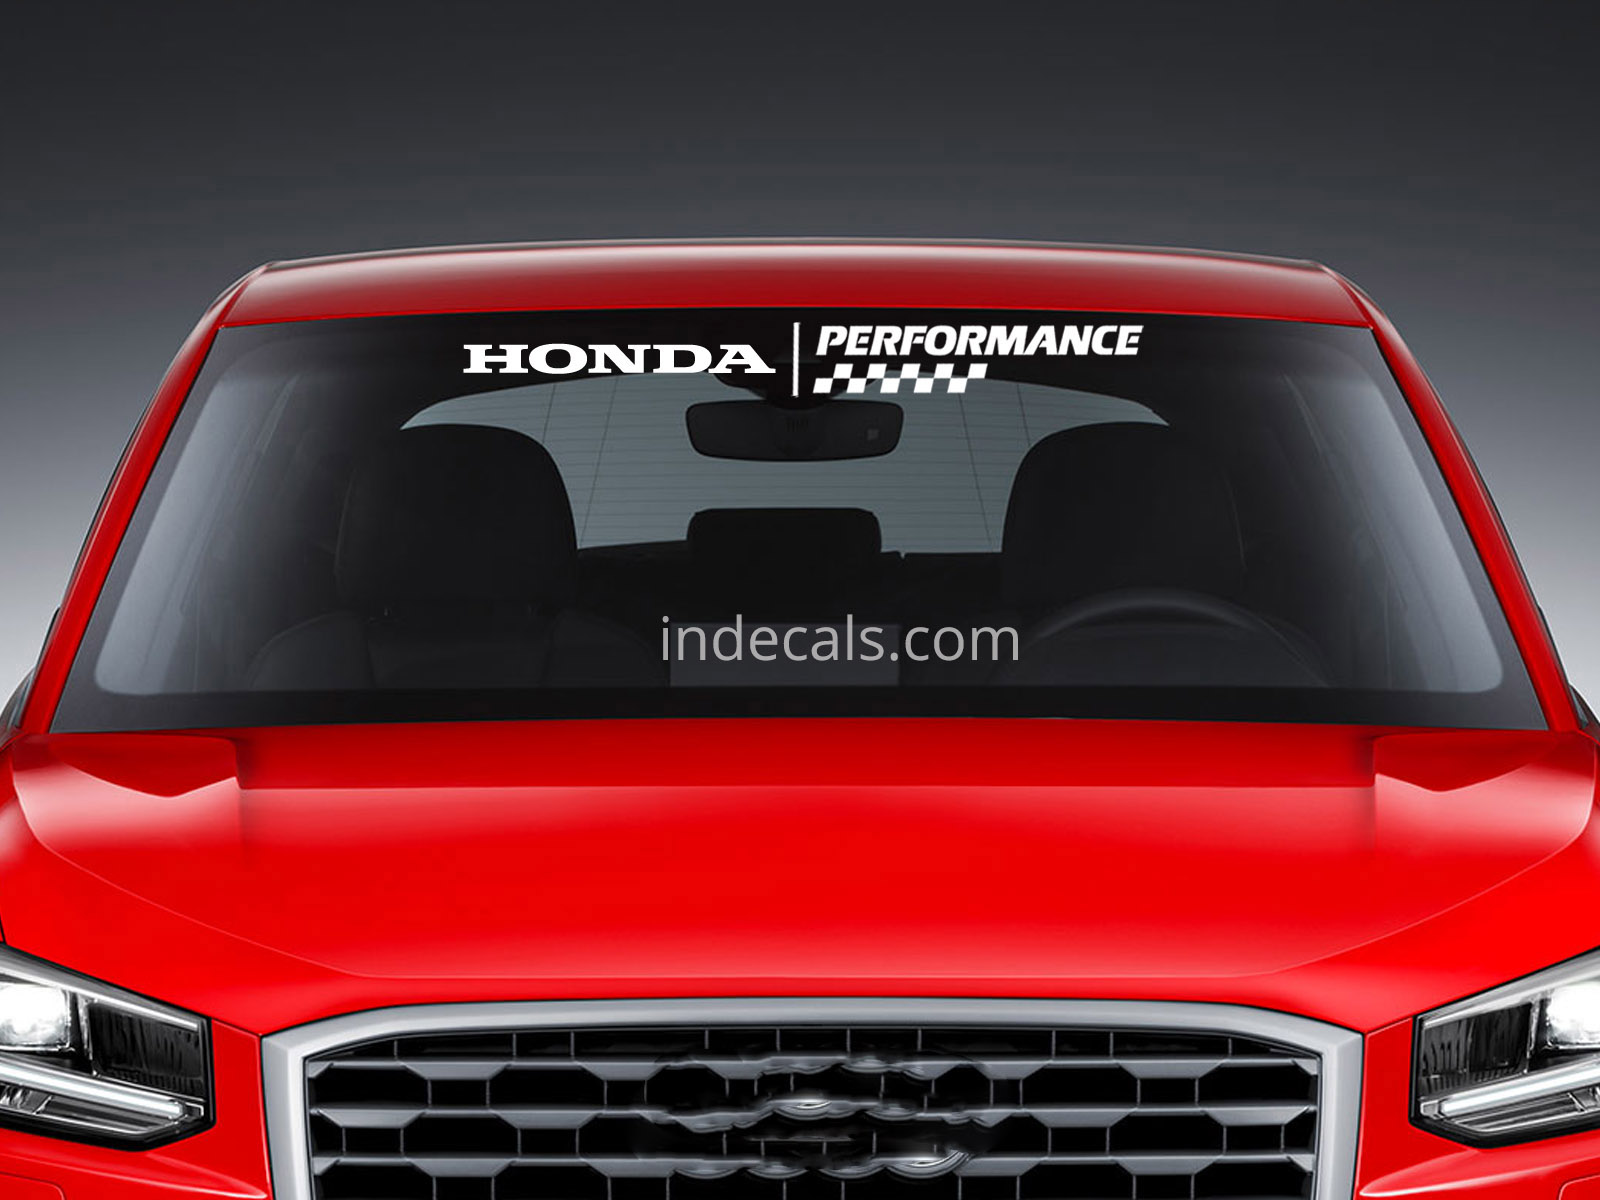 1 x Honda Performance Sticker for Windshield or Back Window - White